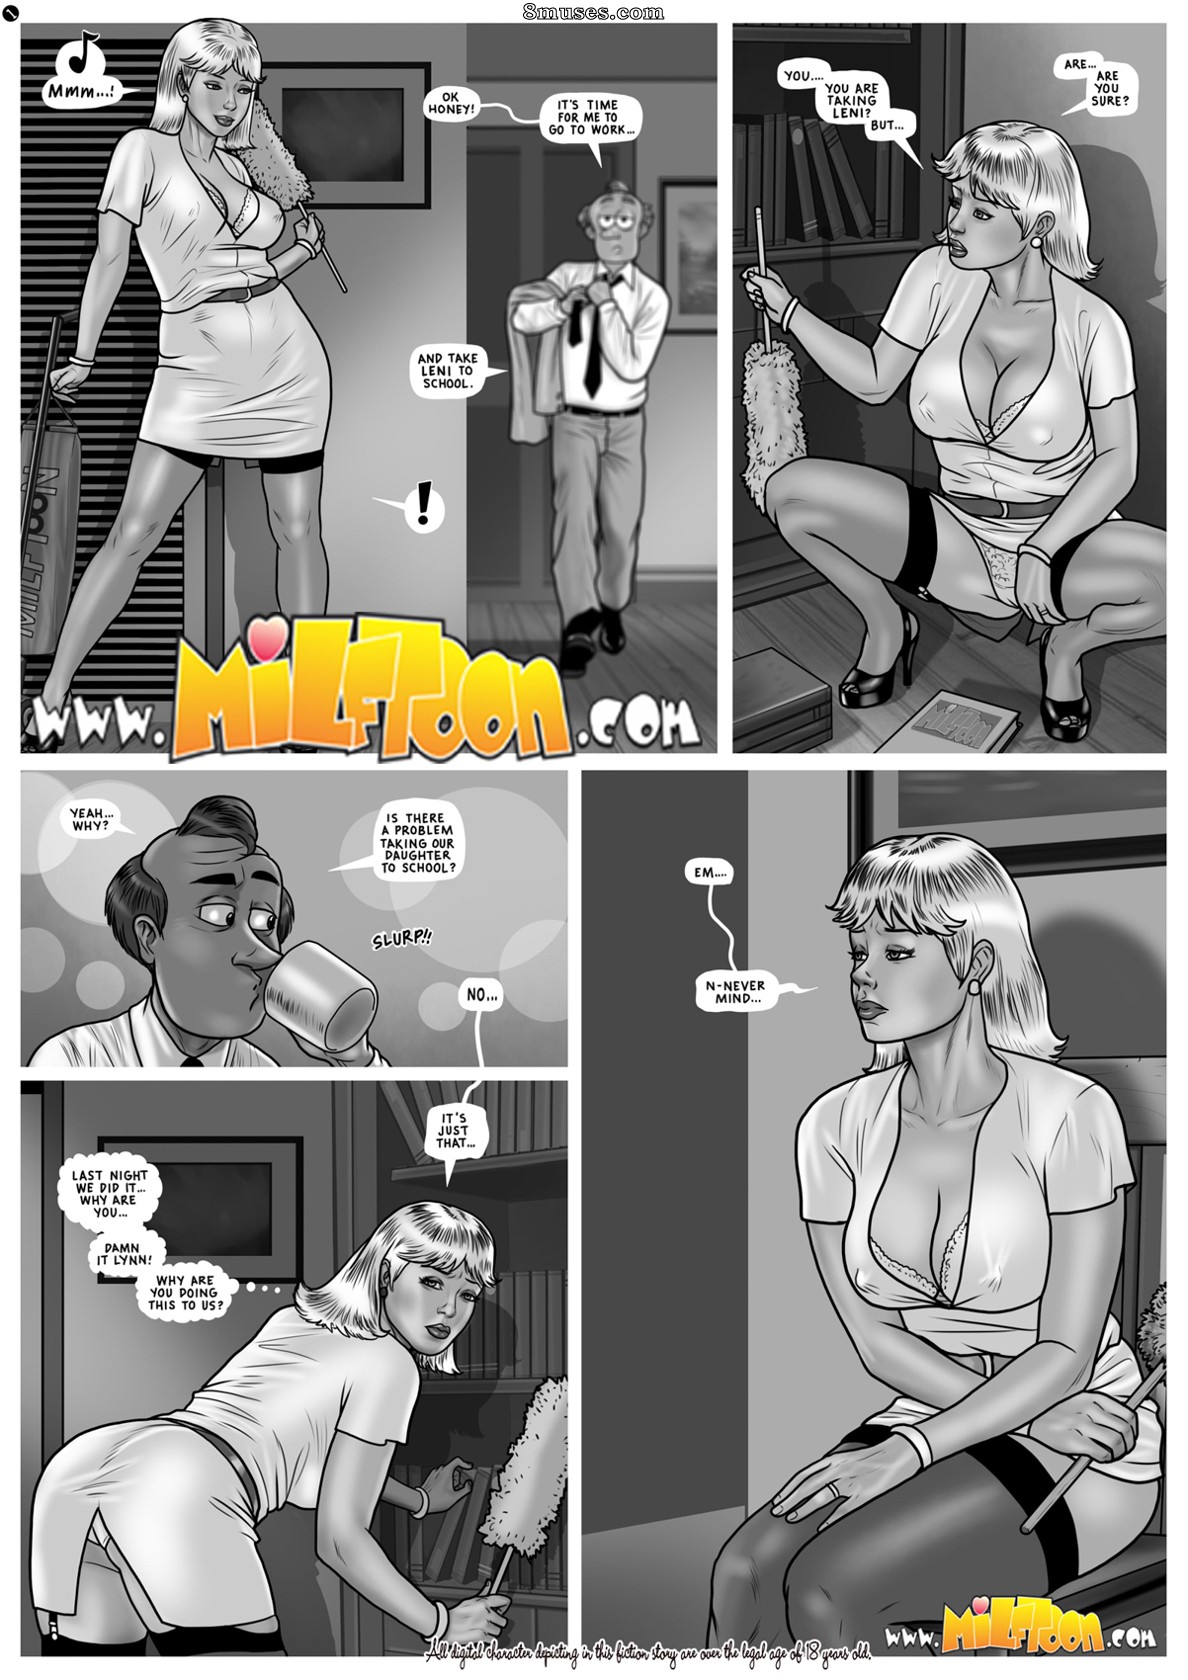 Cartoon strips porn